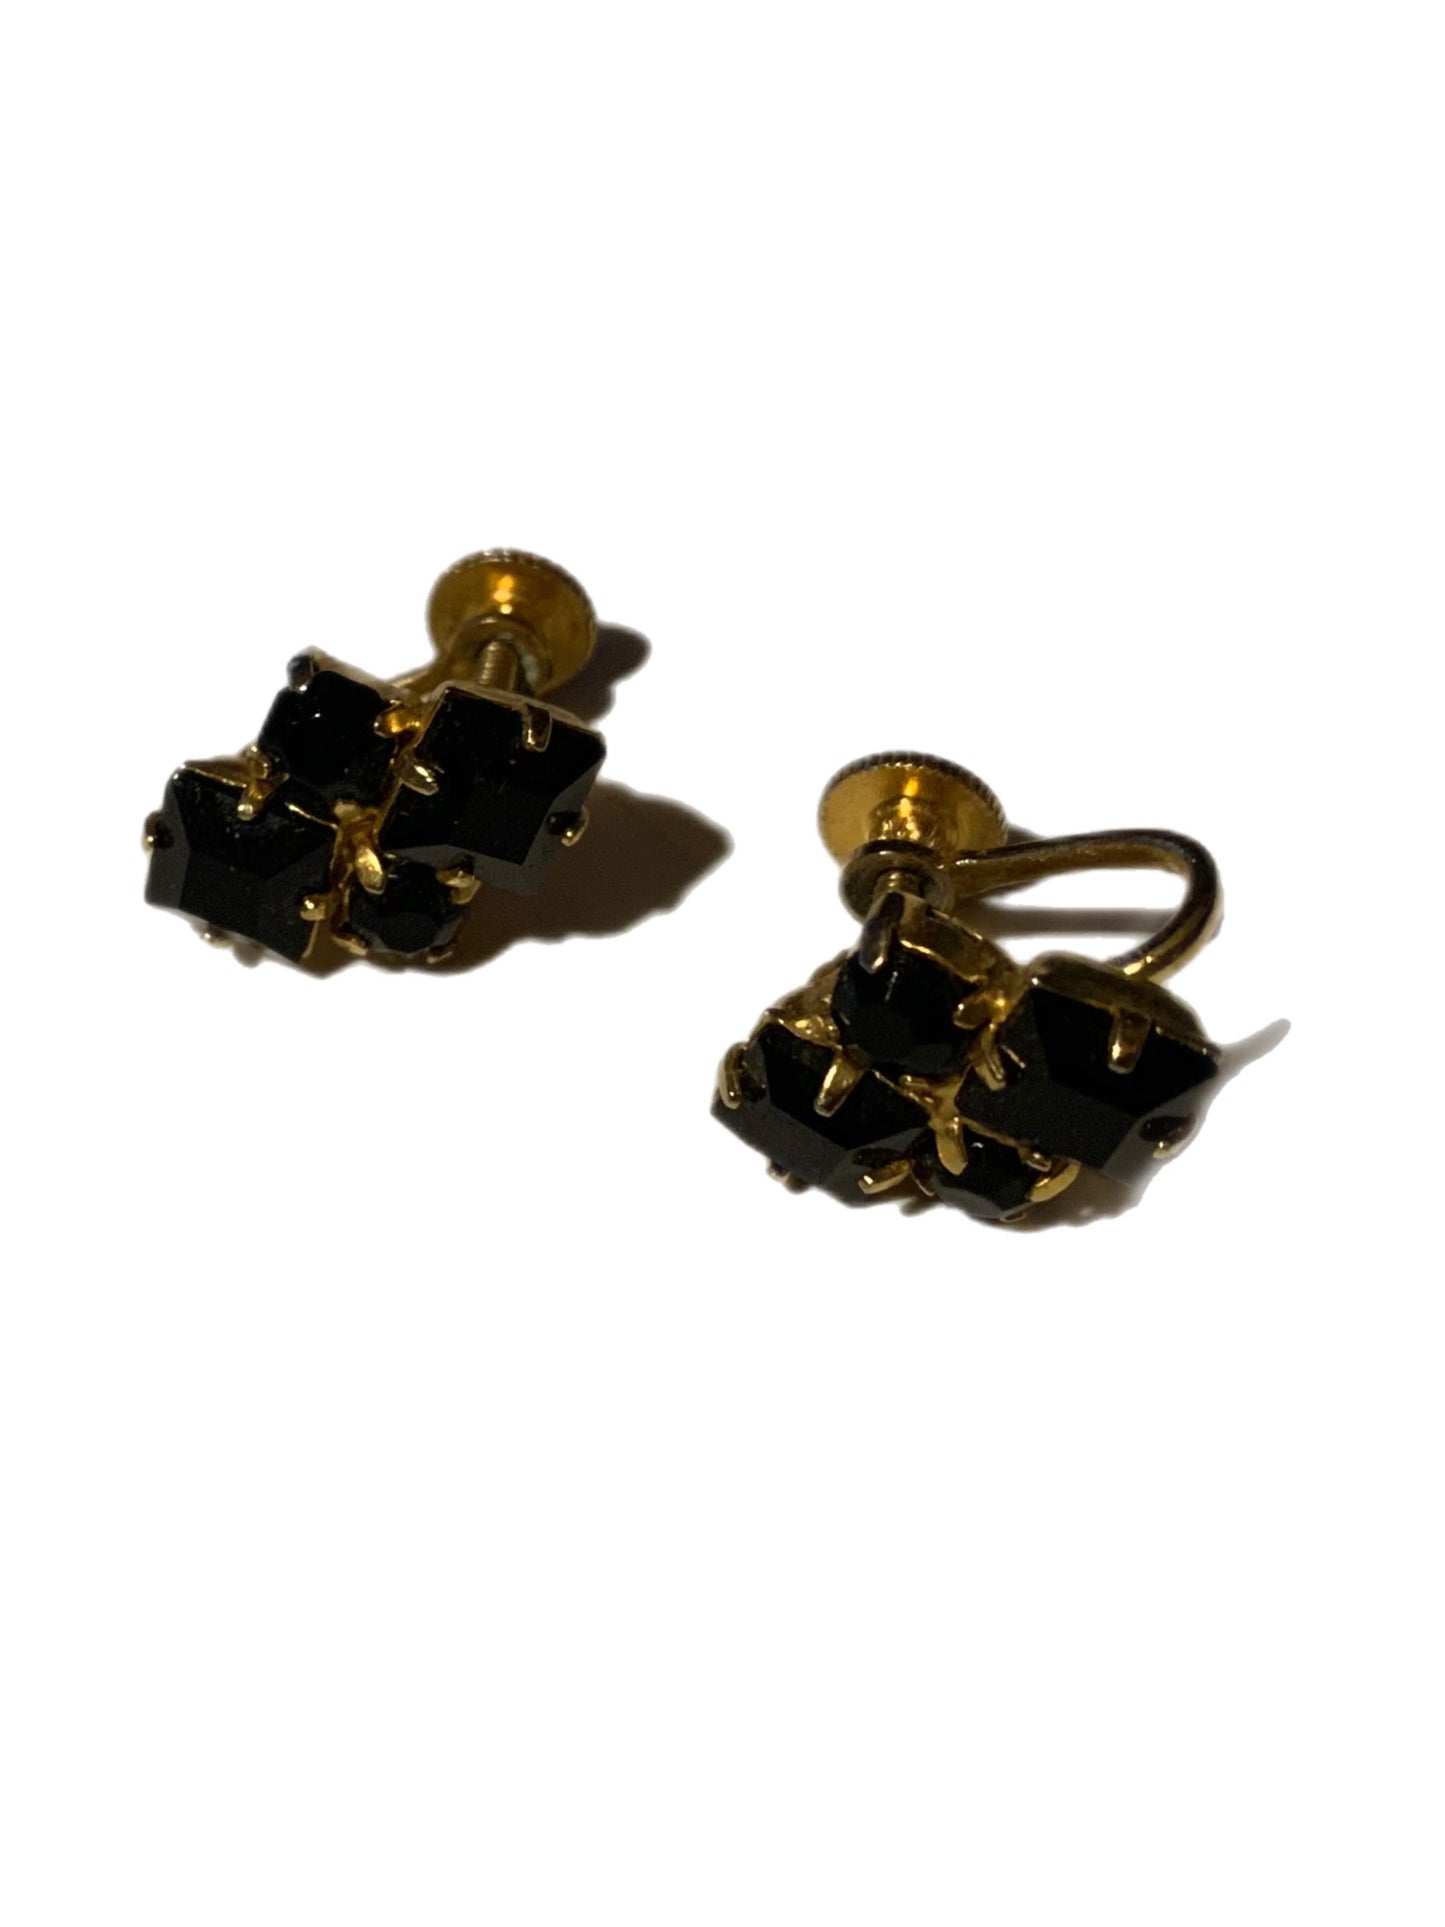 Elegant Black Rhinestone Gold Toned Clip Earrings circa 1940s